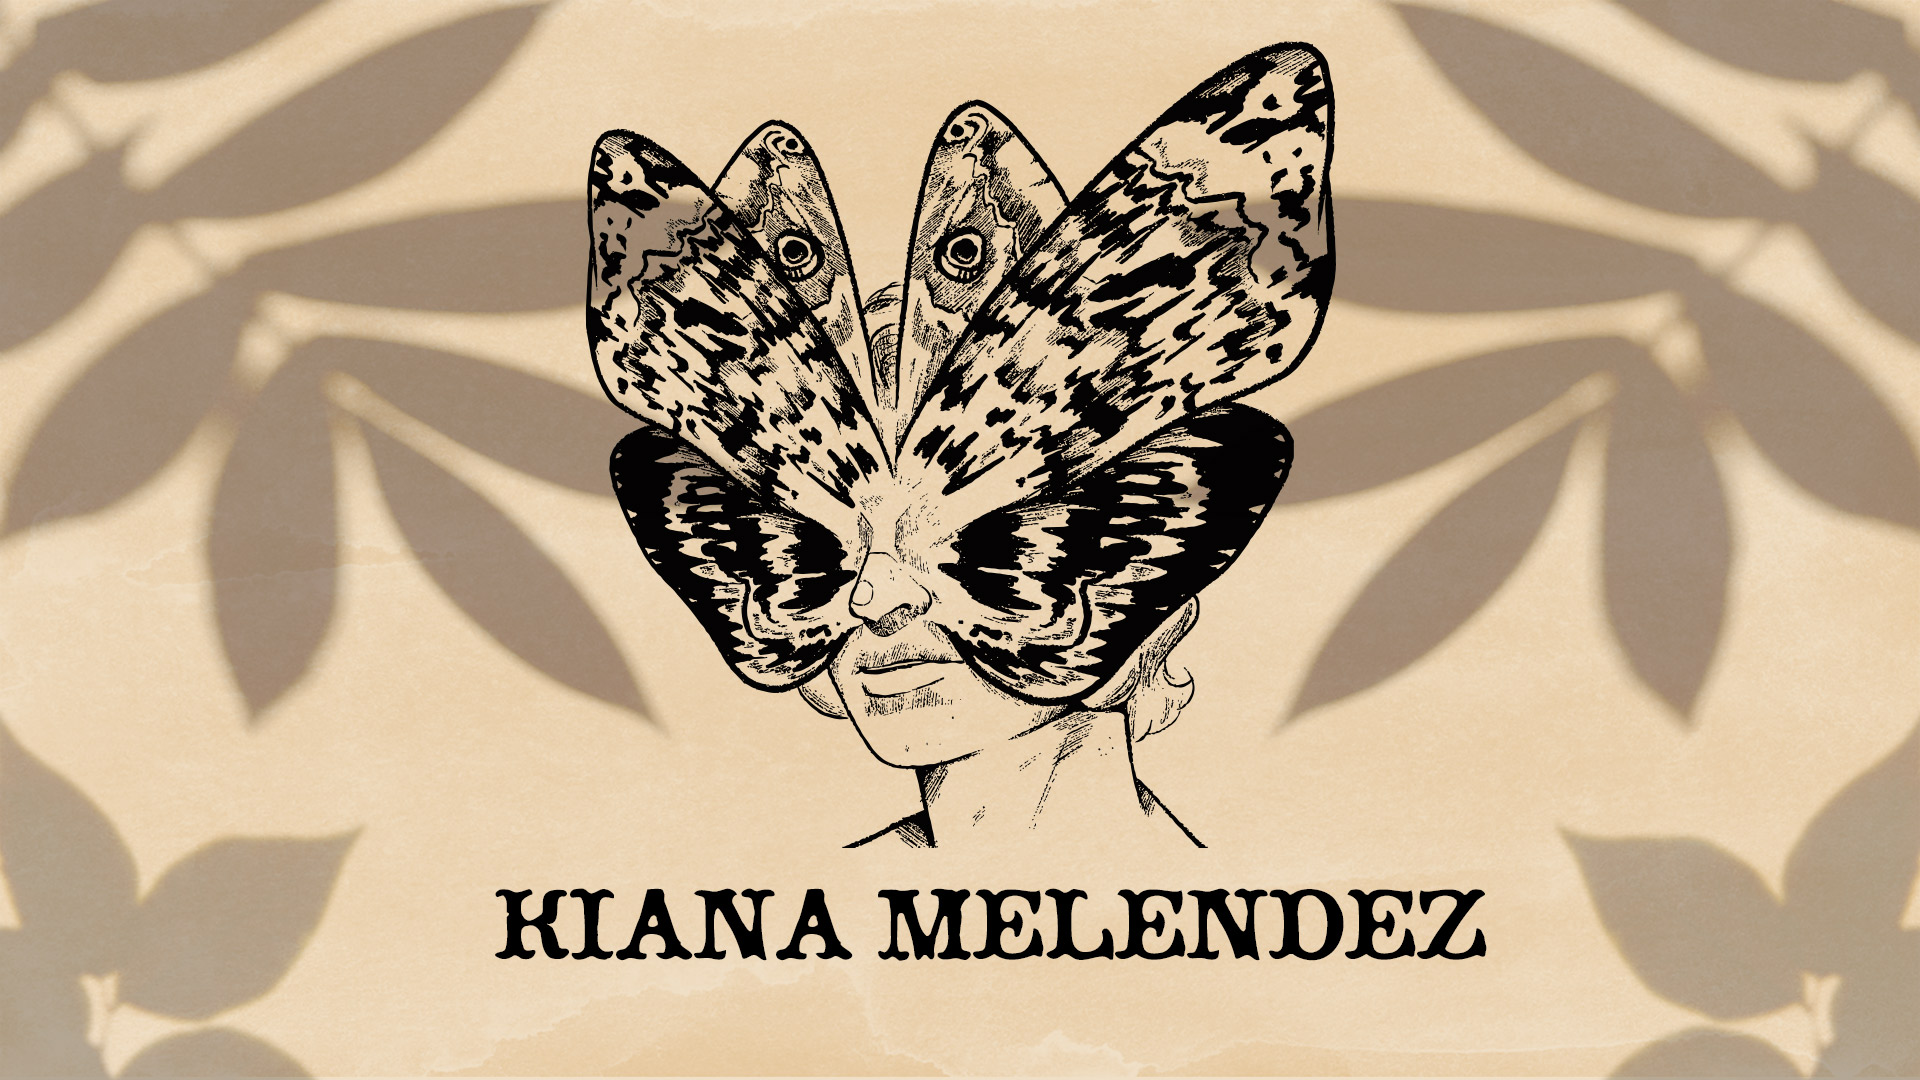 Kiana Melendez / Kiana Melendez: My logo that represents a love for illustrative occult themes and passion for design. 